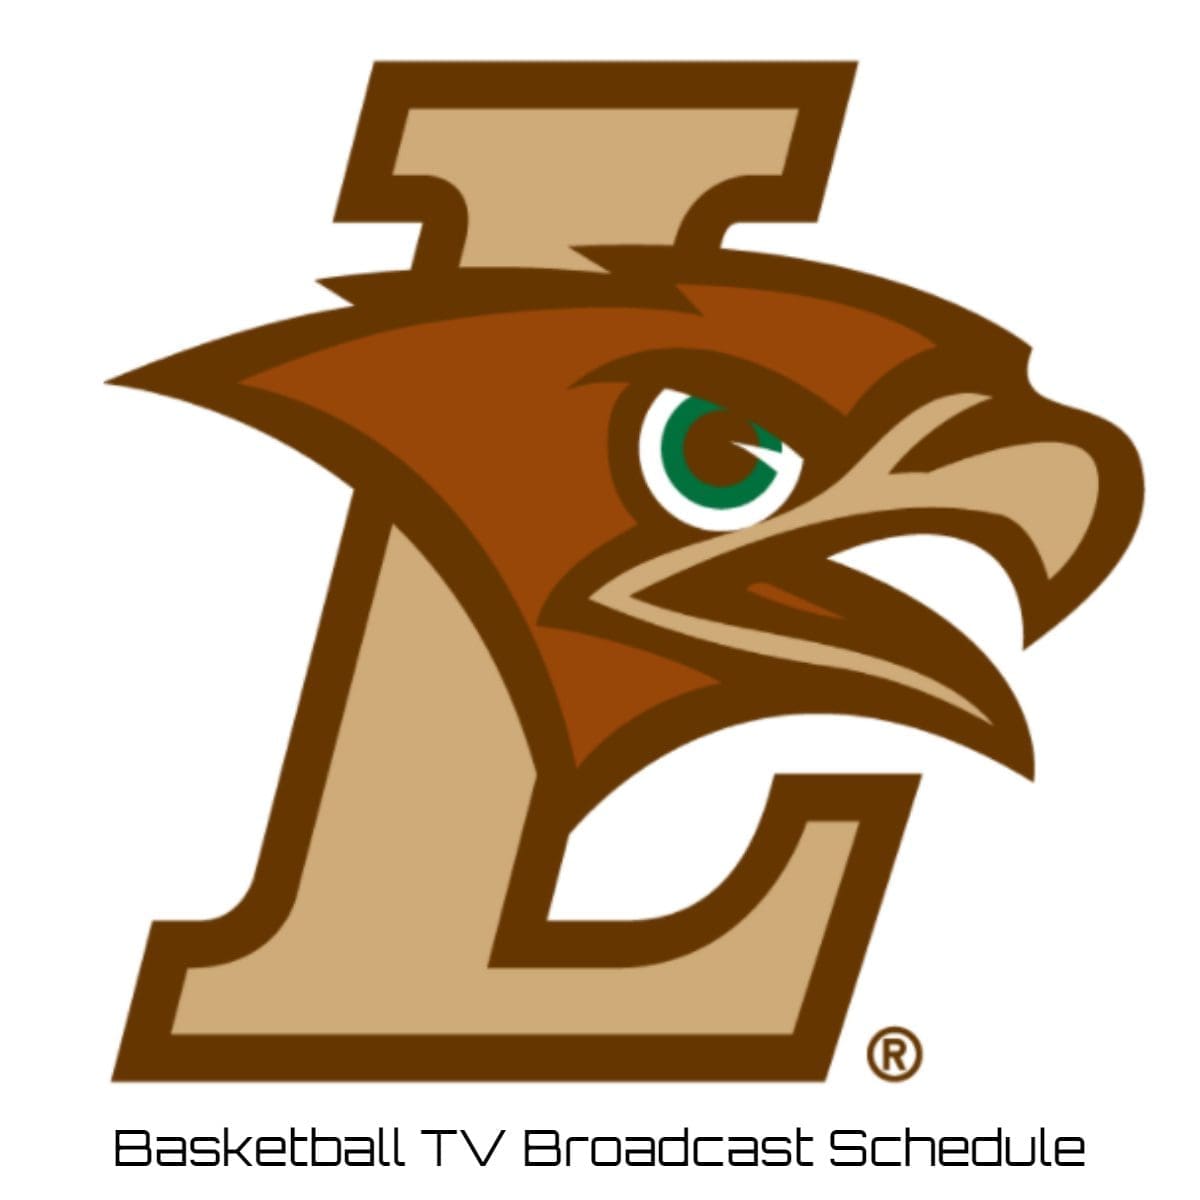 Lehigh Mountain Hawks Basketball TV Broadcast Schedule